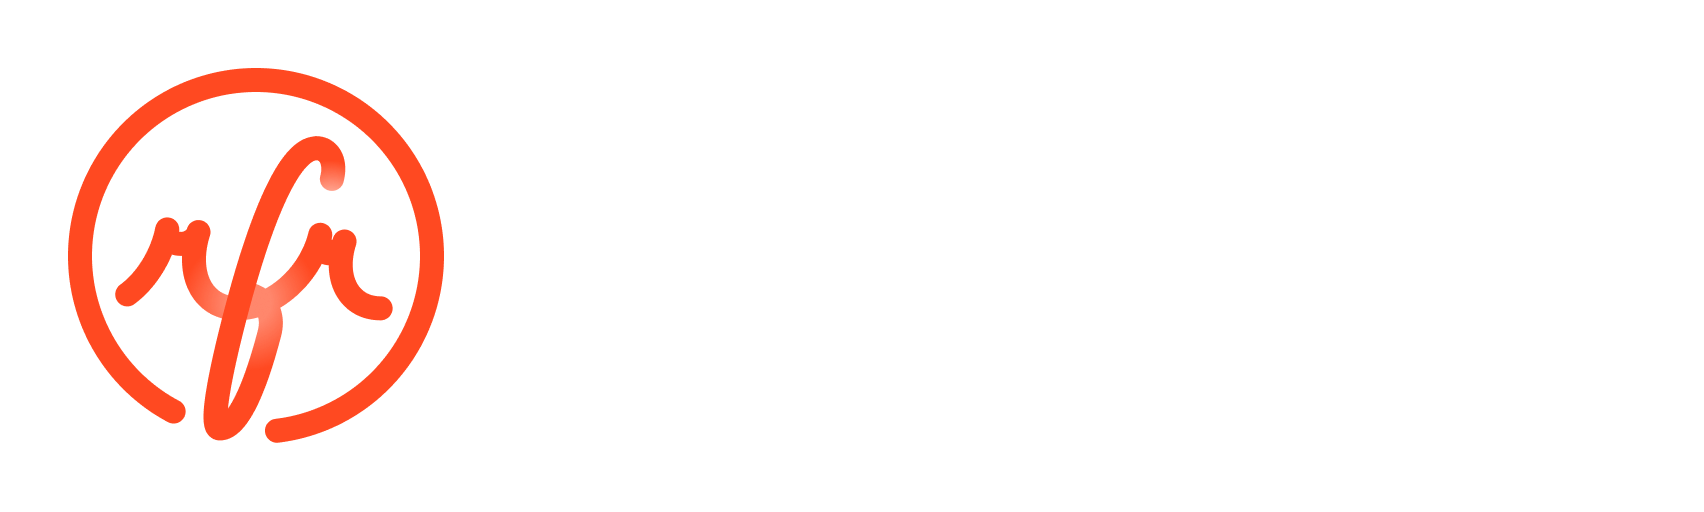 Remote First Recruiting